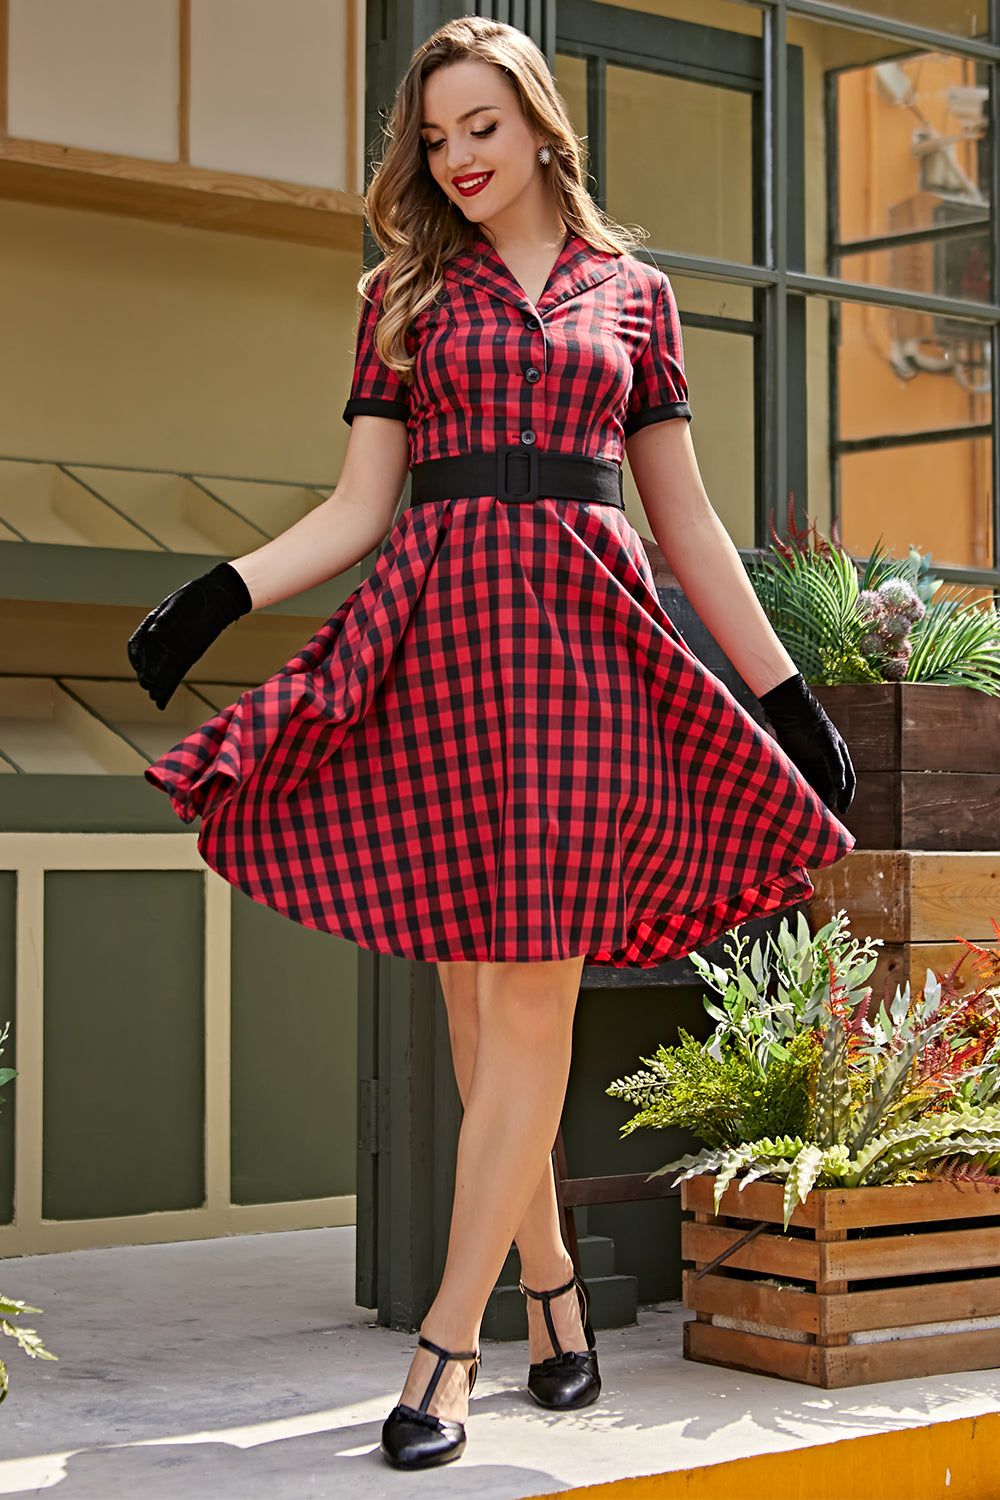 Zapaka Women Vintage Plaid 1950s Dress Short Sleeves Collared